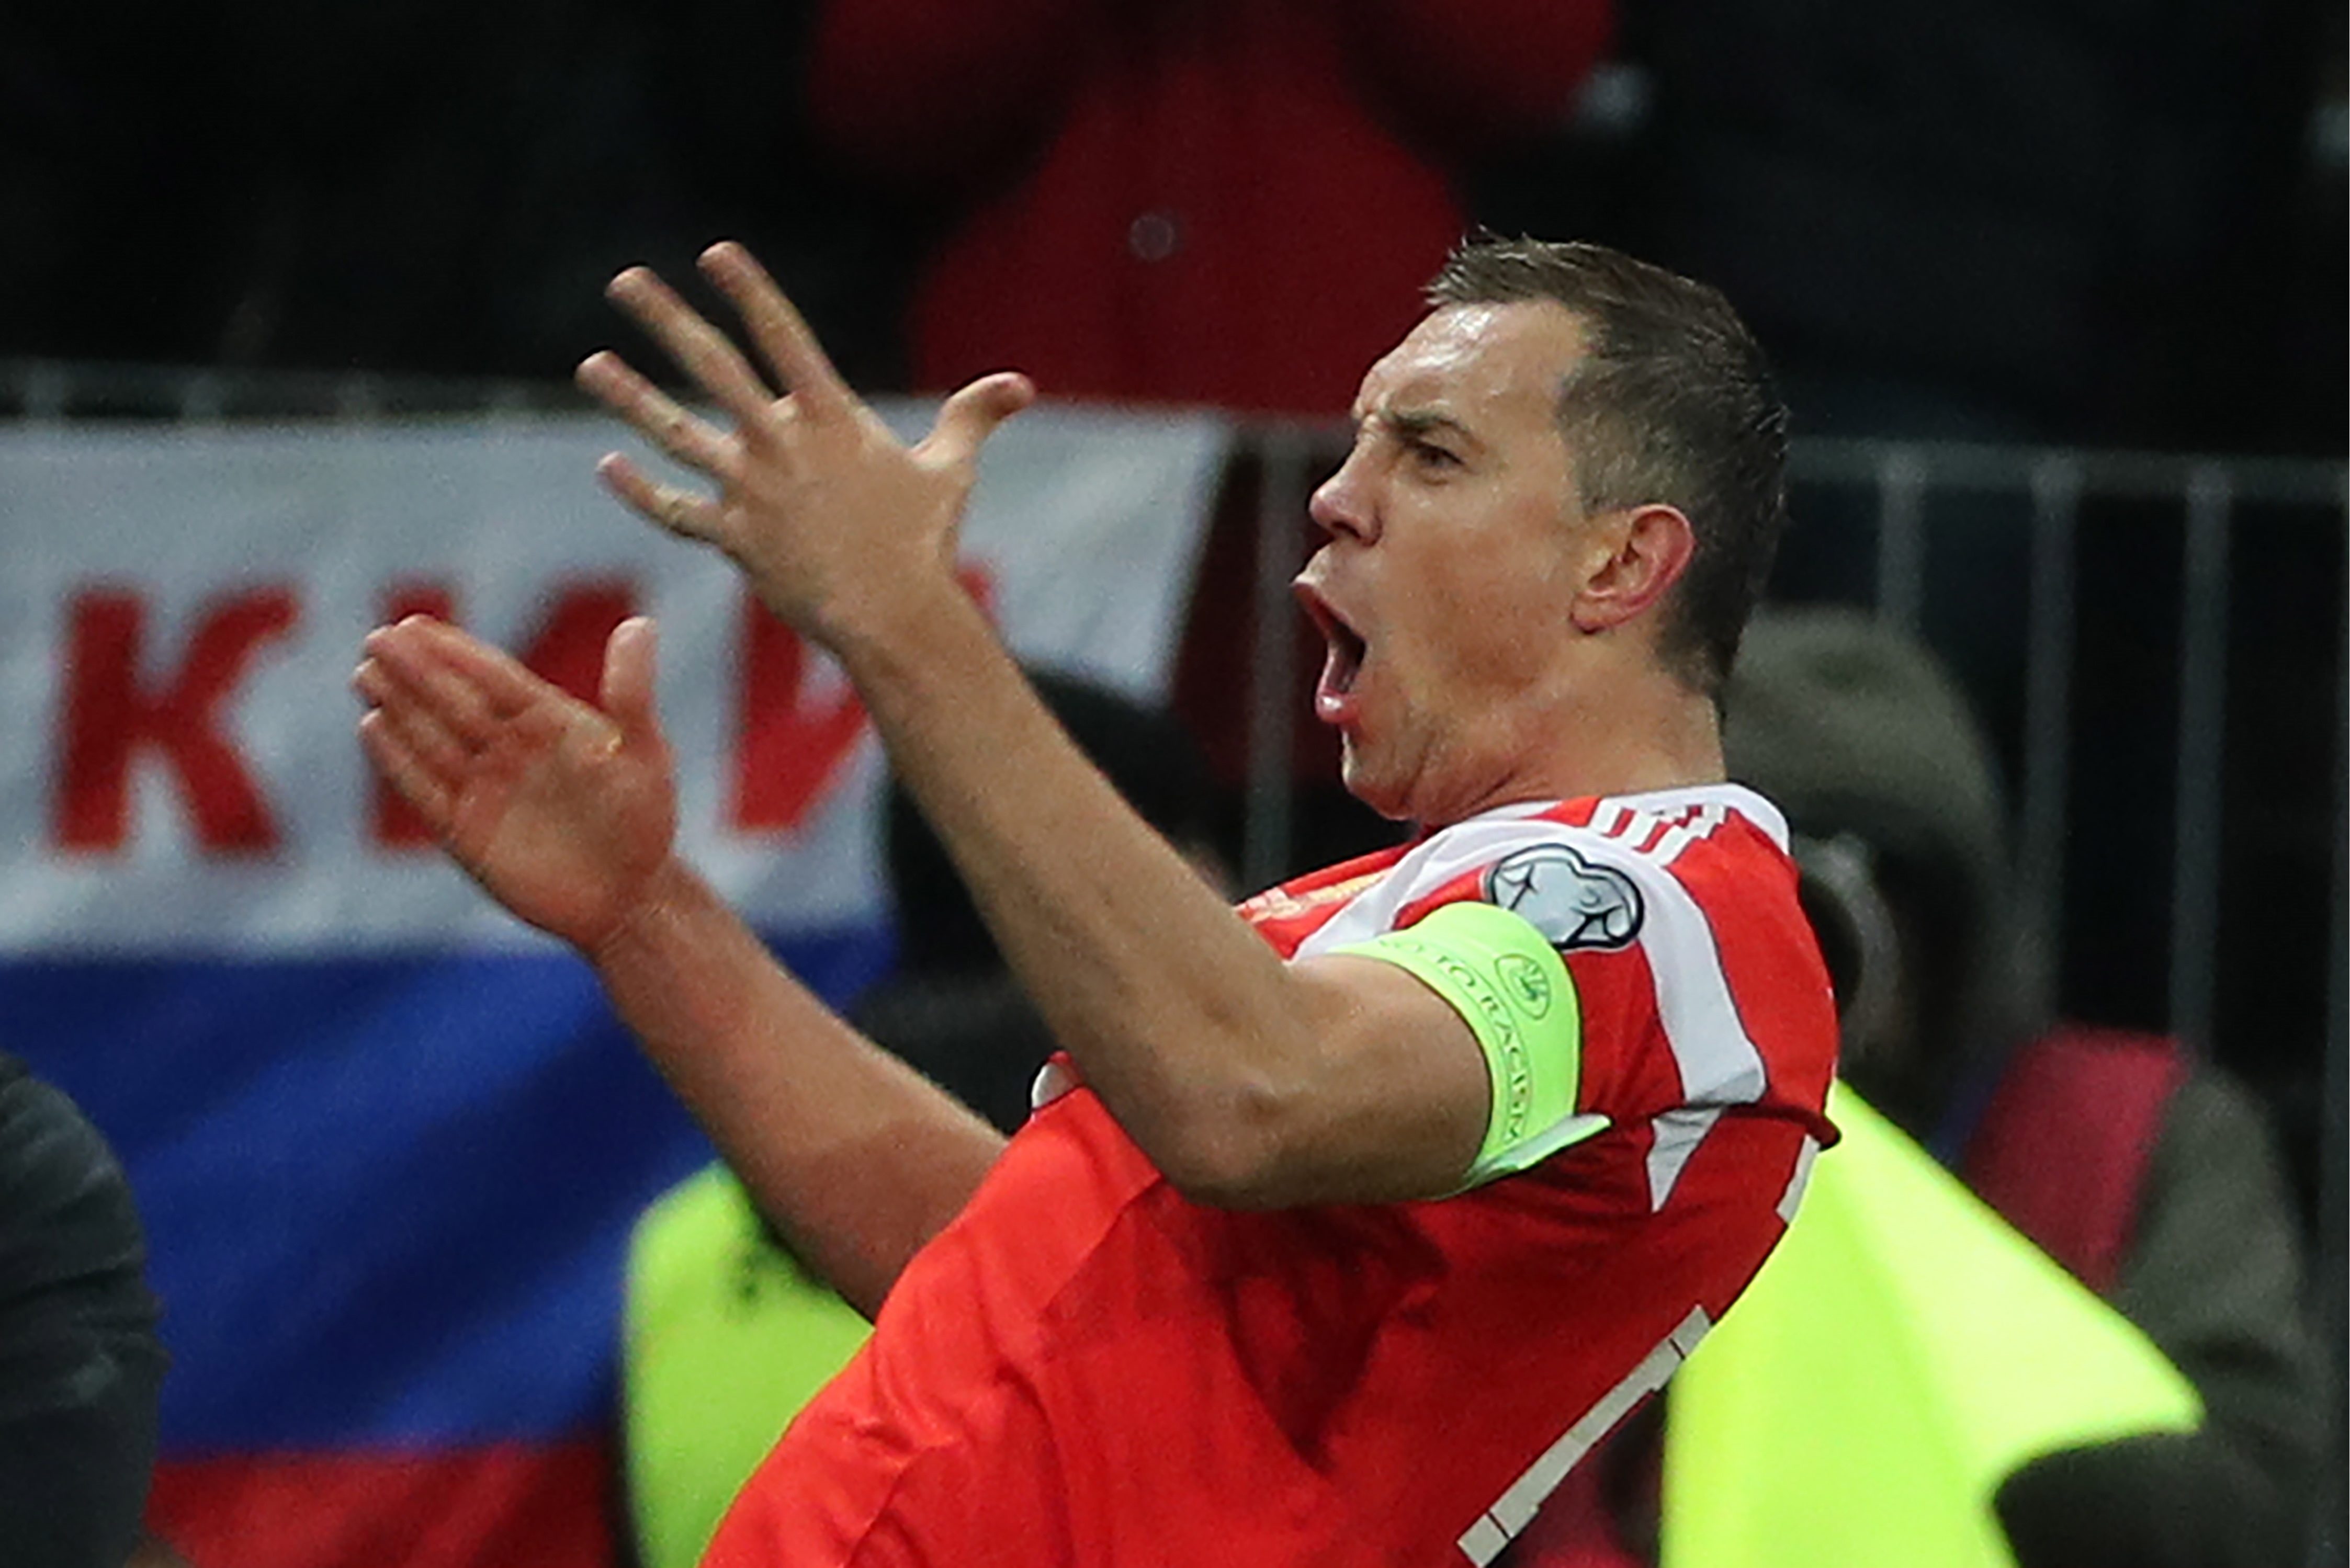 Artem Dzyuba struck twice on a memorable night for Russia.